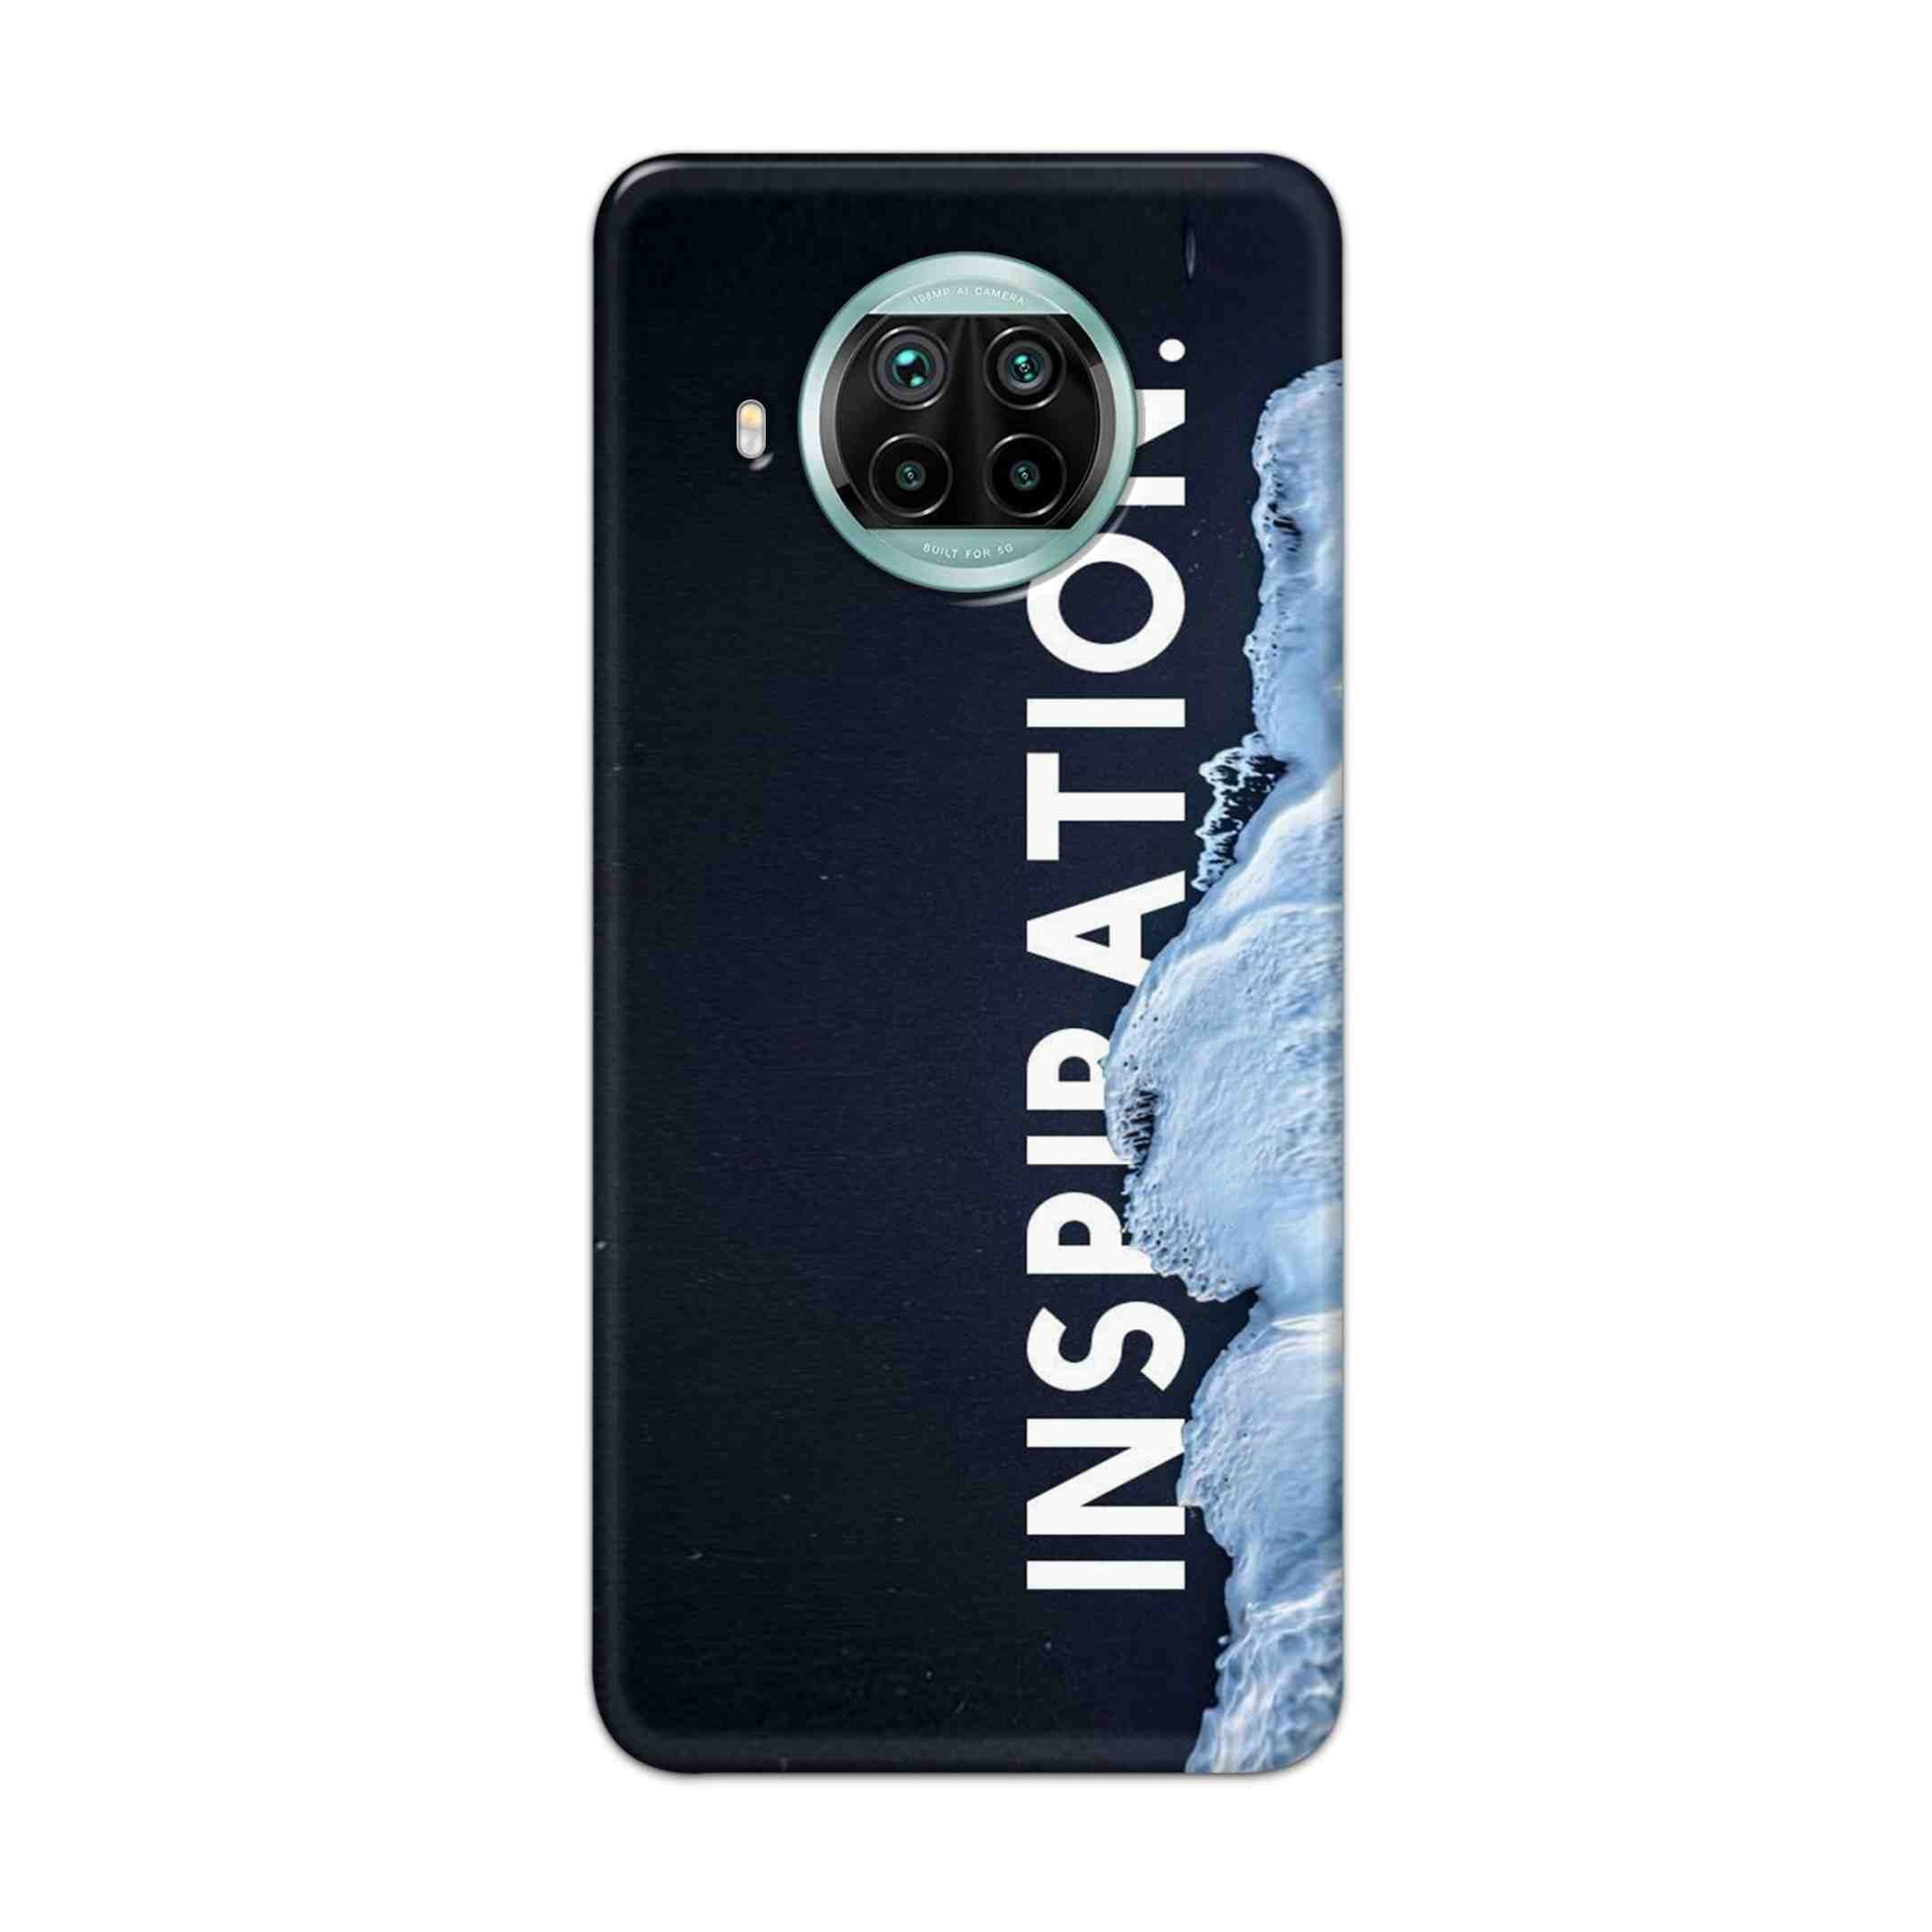 Buy Inspiration Hard Back Mobile Phone Case Cover For Xiaomi Mi 10i Online